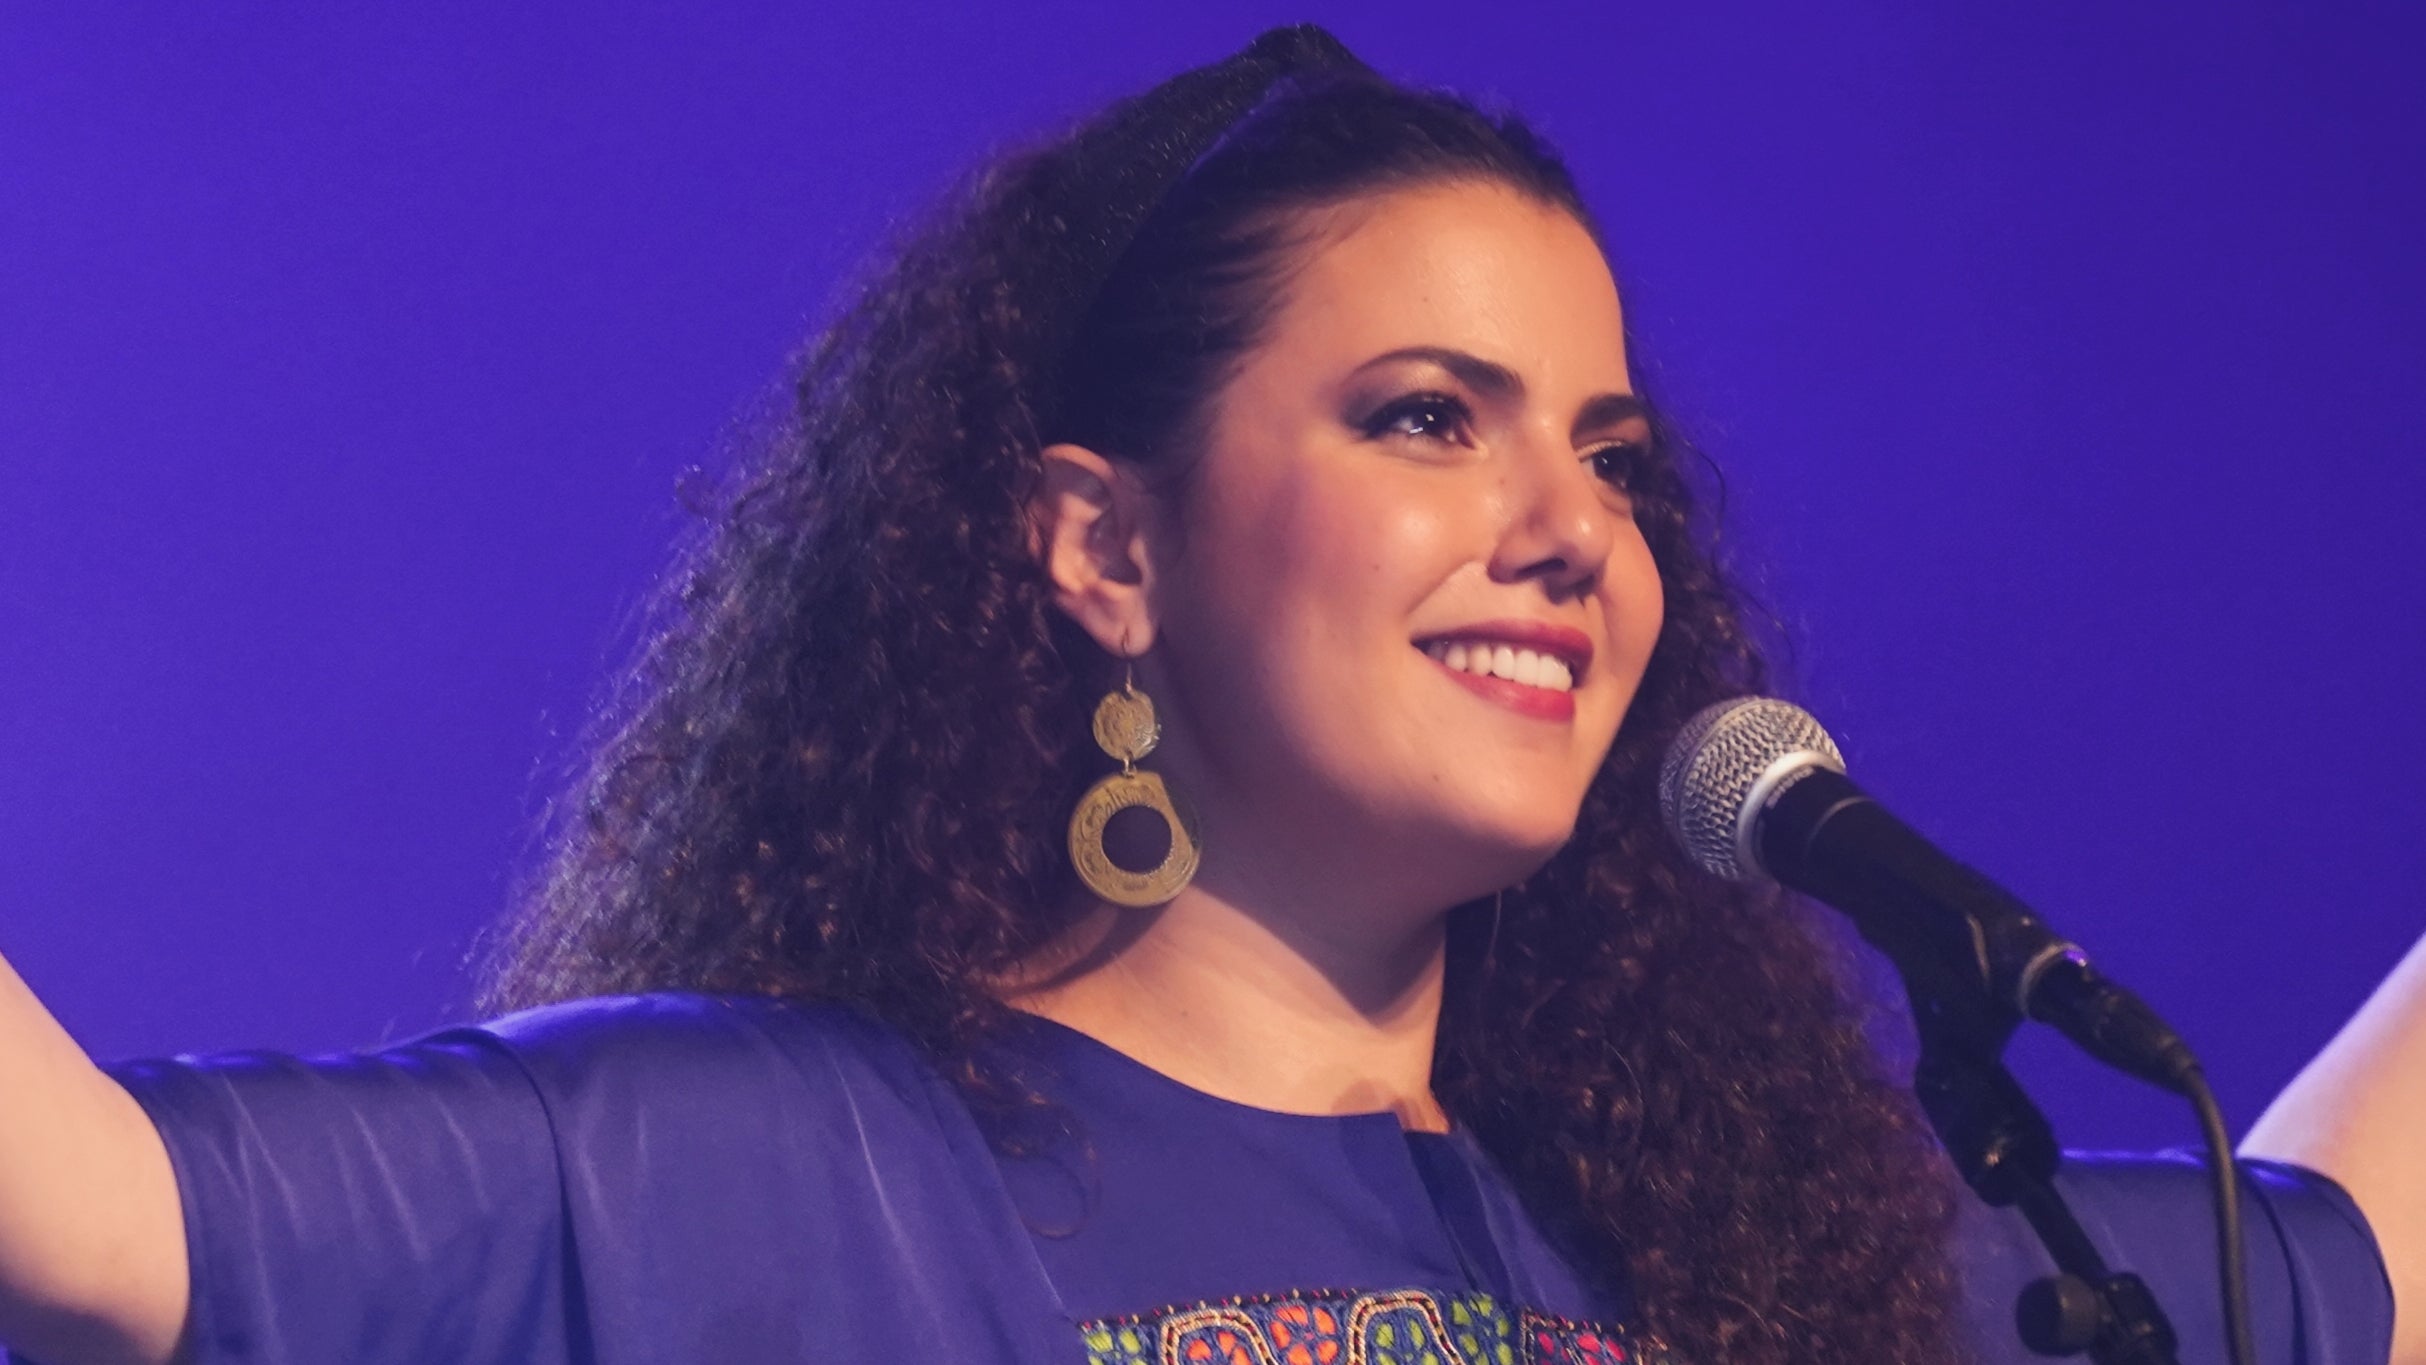 Toronto Palestine Film Festival presents Nai Barghouti in concert